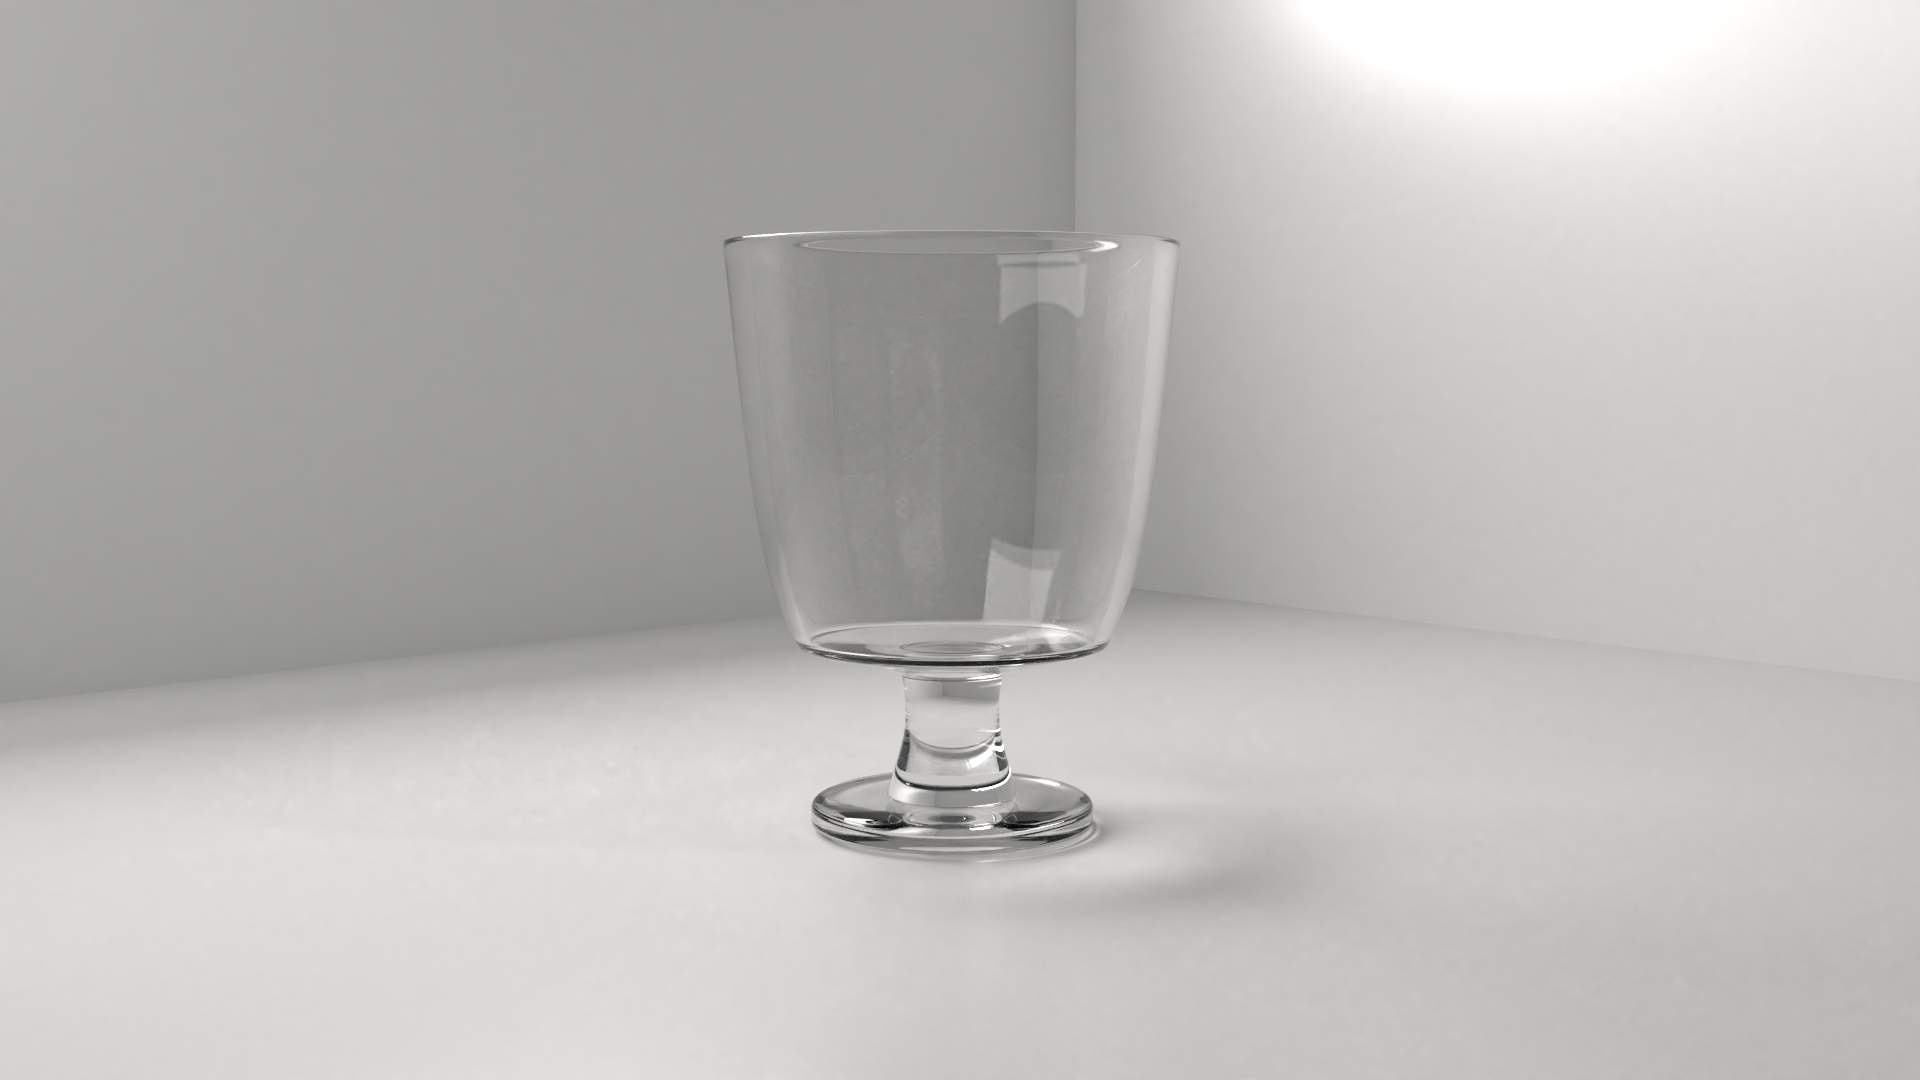 Glass goblet 3D, Model by Unos, Exquisite design, Goblet glass, 1920x1080 Full HD Desktop